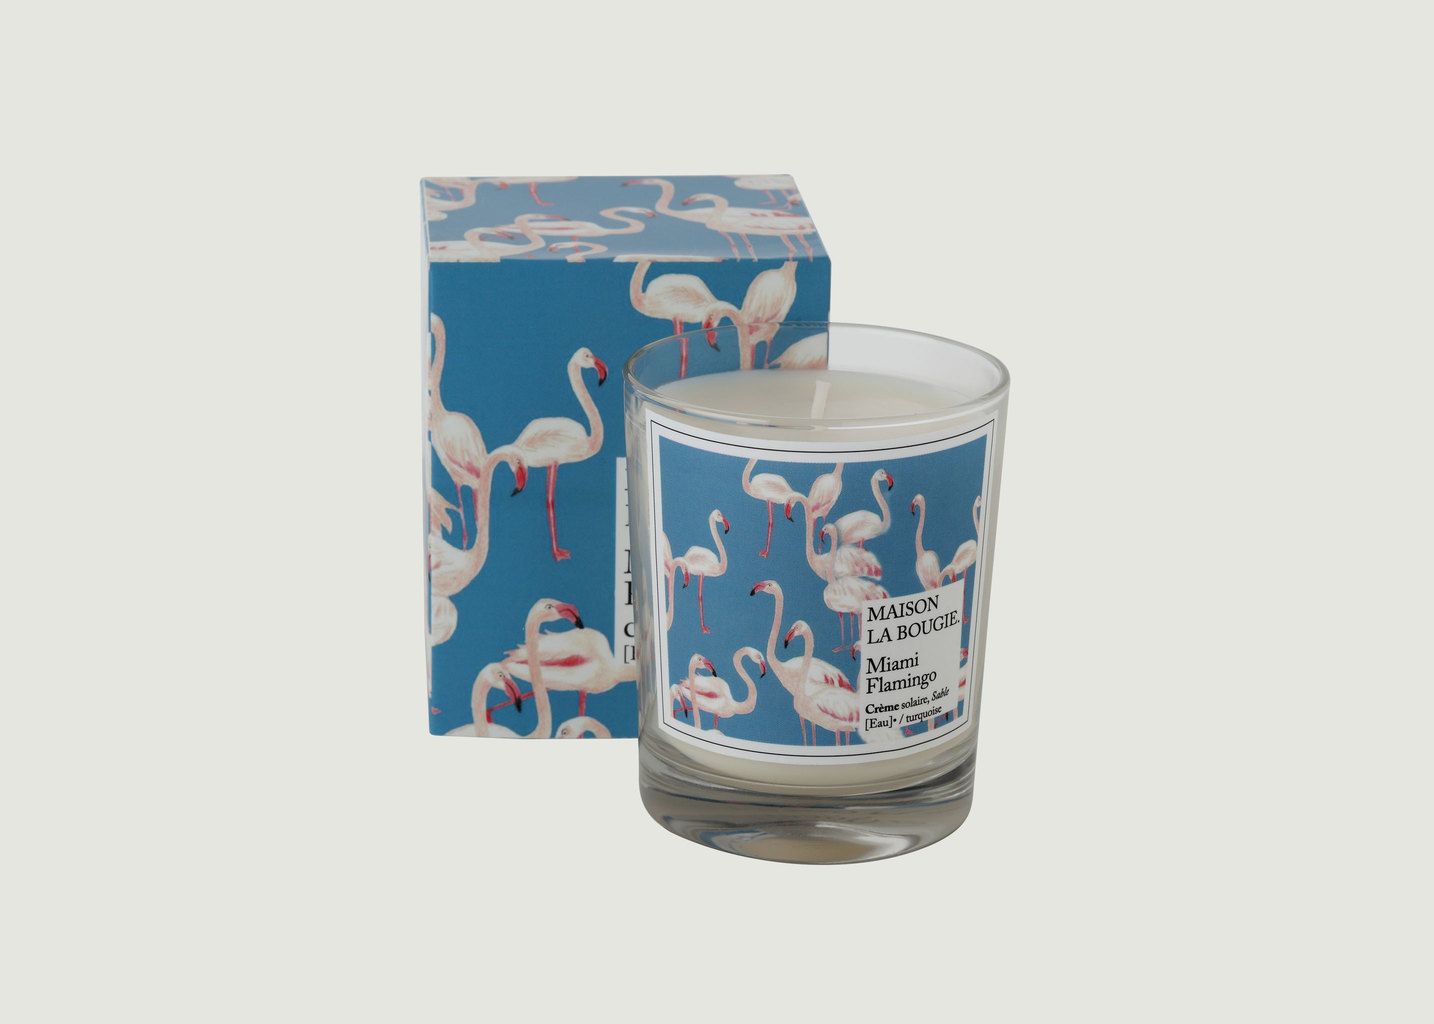 Miami Flamingo Candle - Maison La Bougie